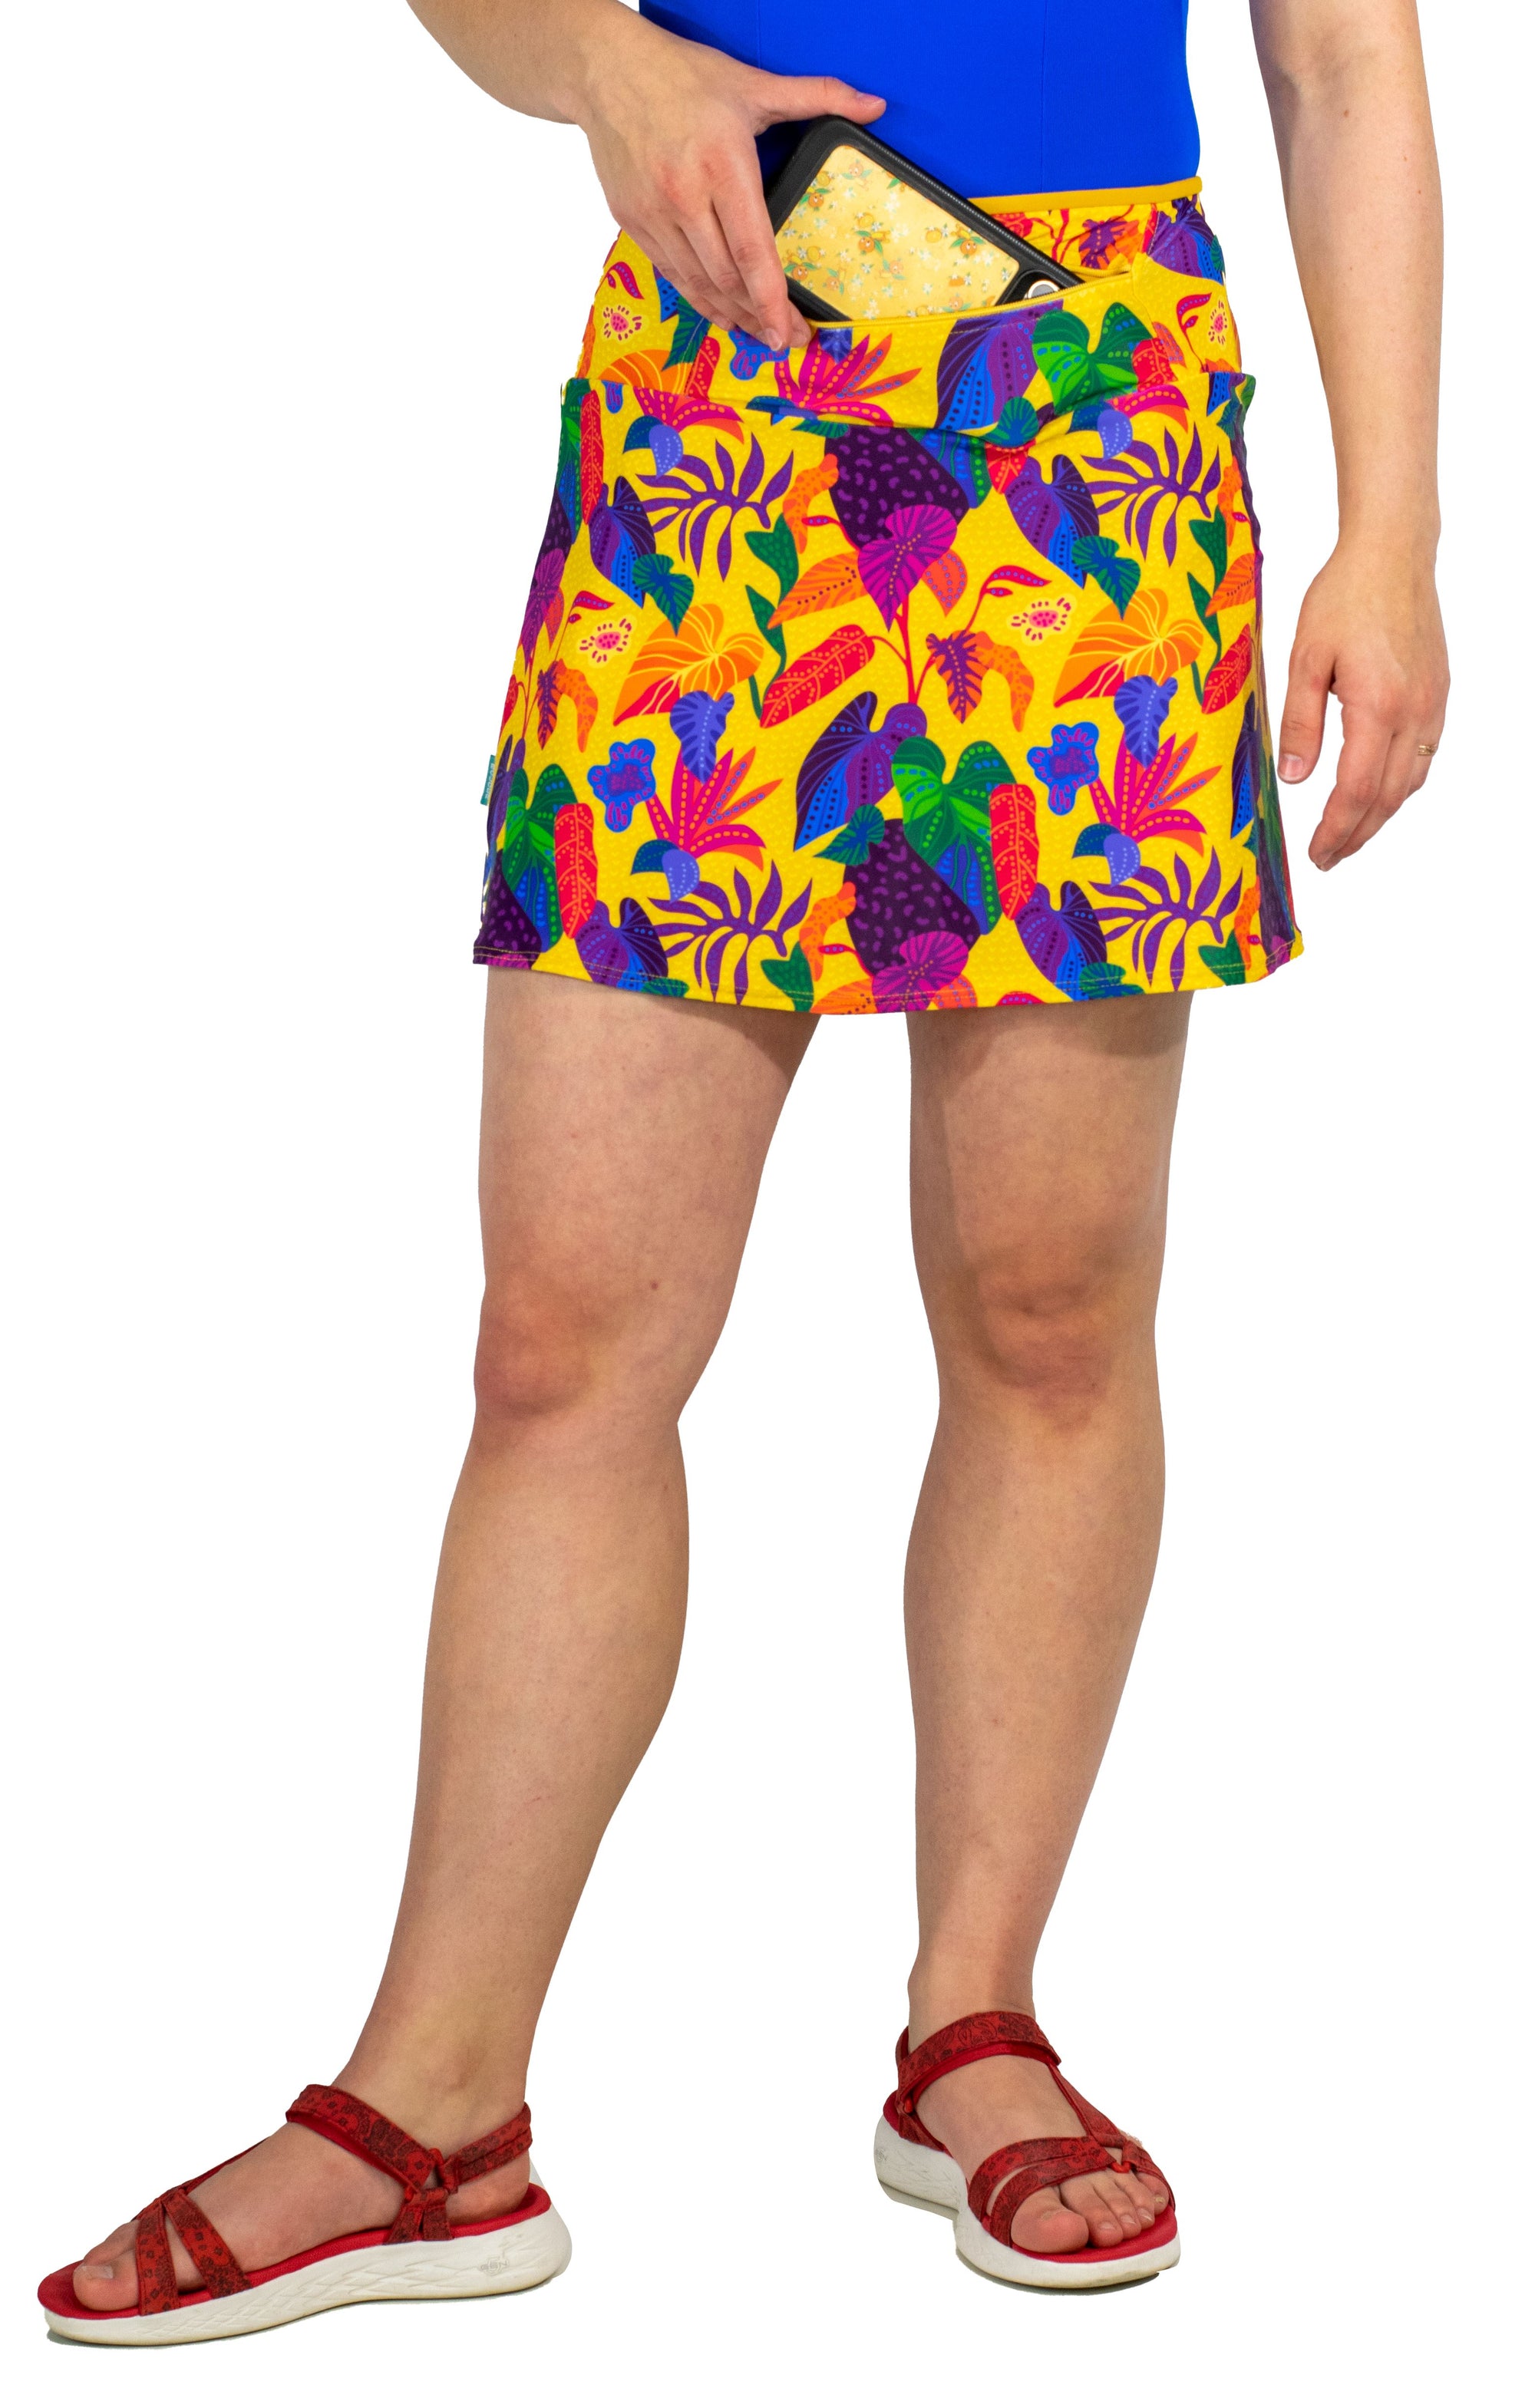 TropiColor Skirts (6 Styles) – Bolder Athletic Wear